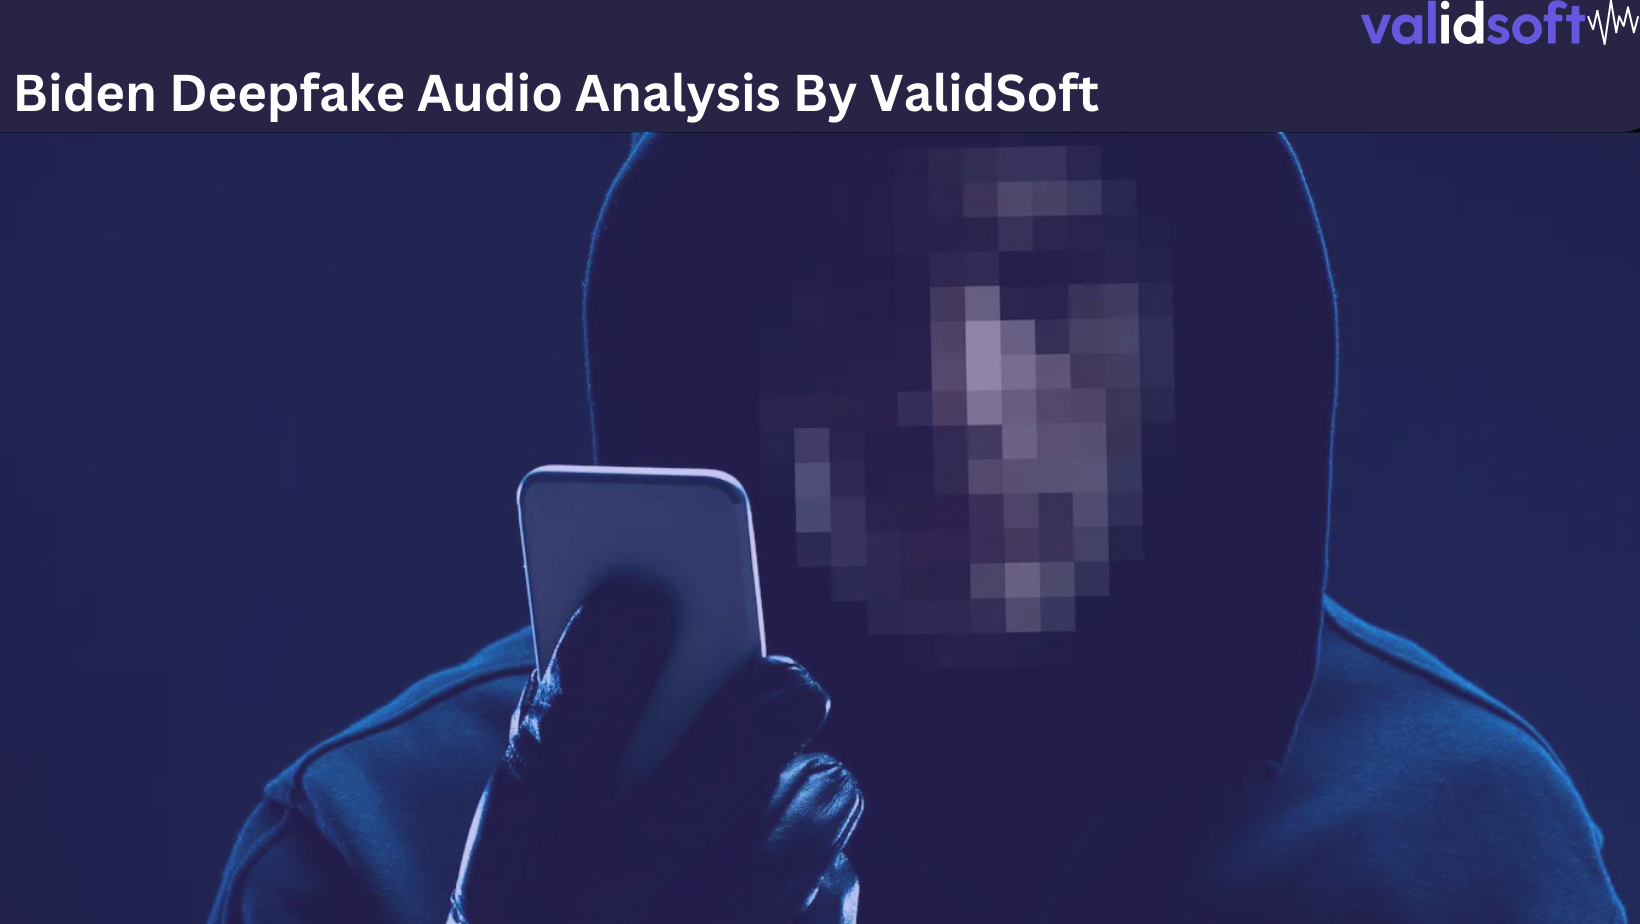 Biden Deepfake Audio Detected By ValidSoft